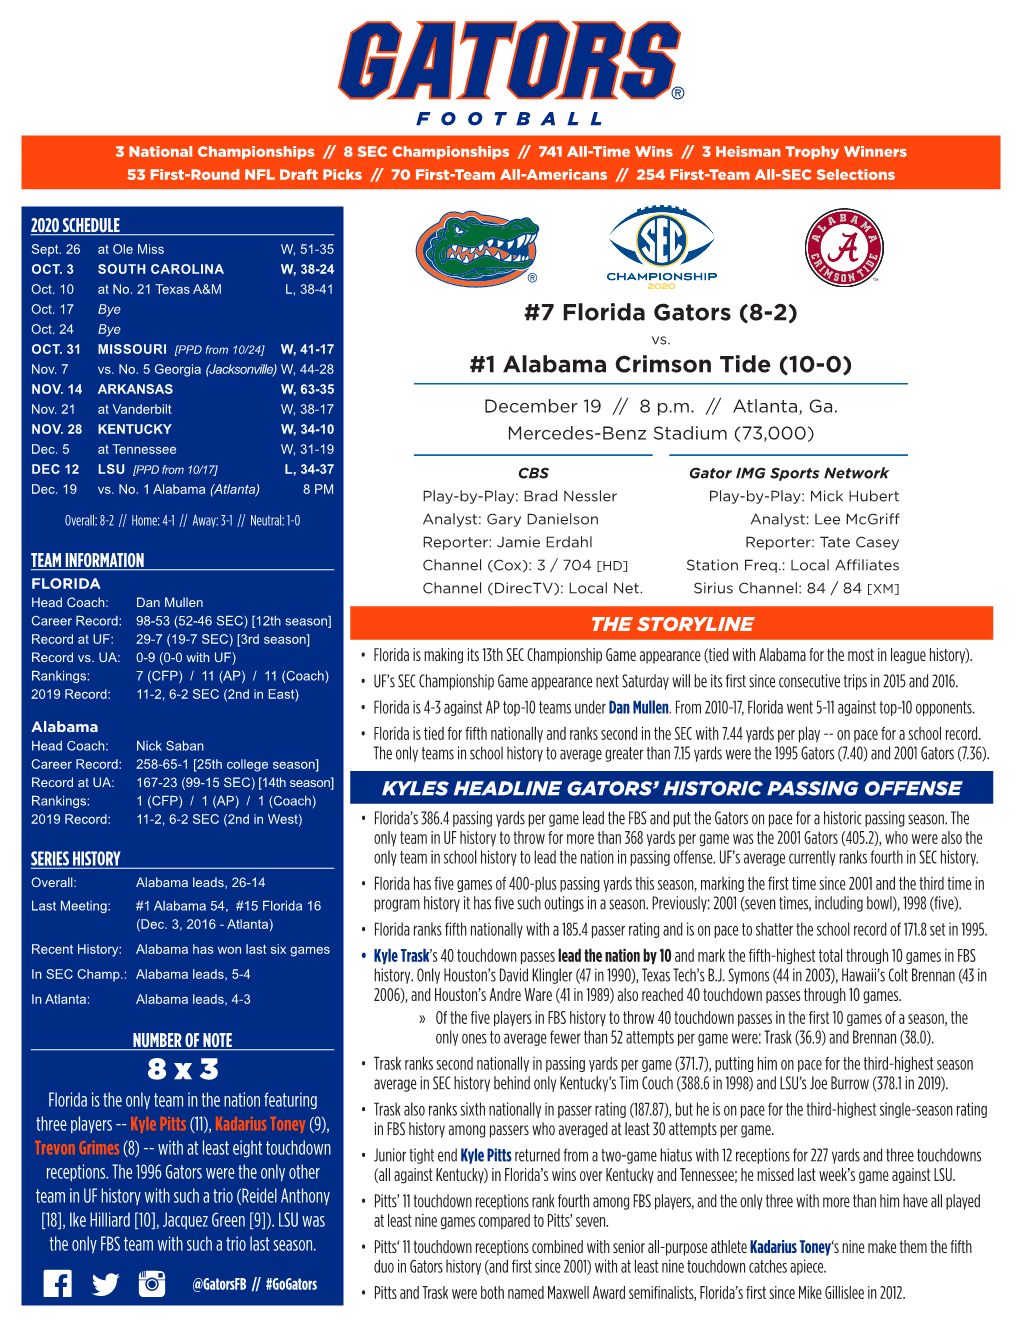 7 Florida Gators (8-2) #1 Alabama Crimson Tide (10-0)